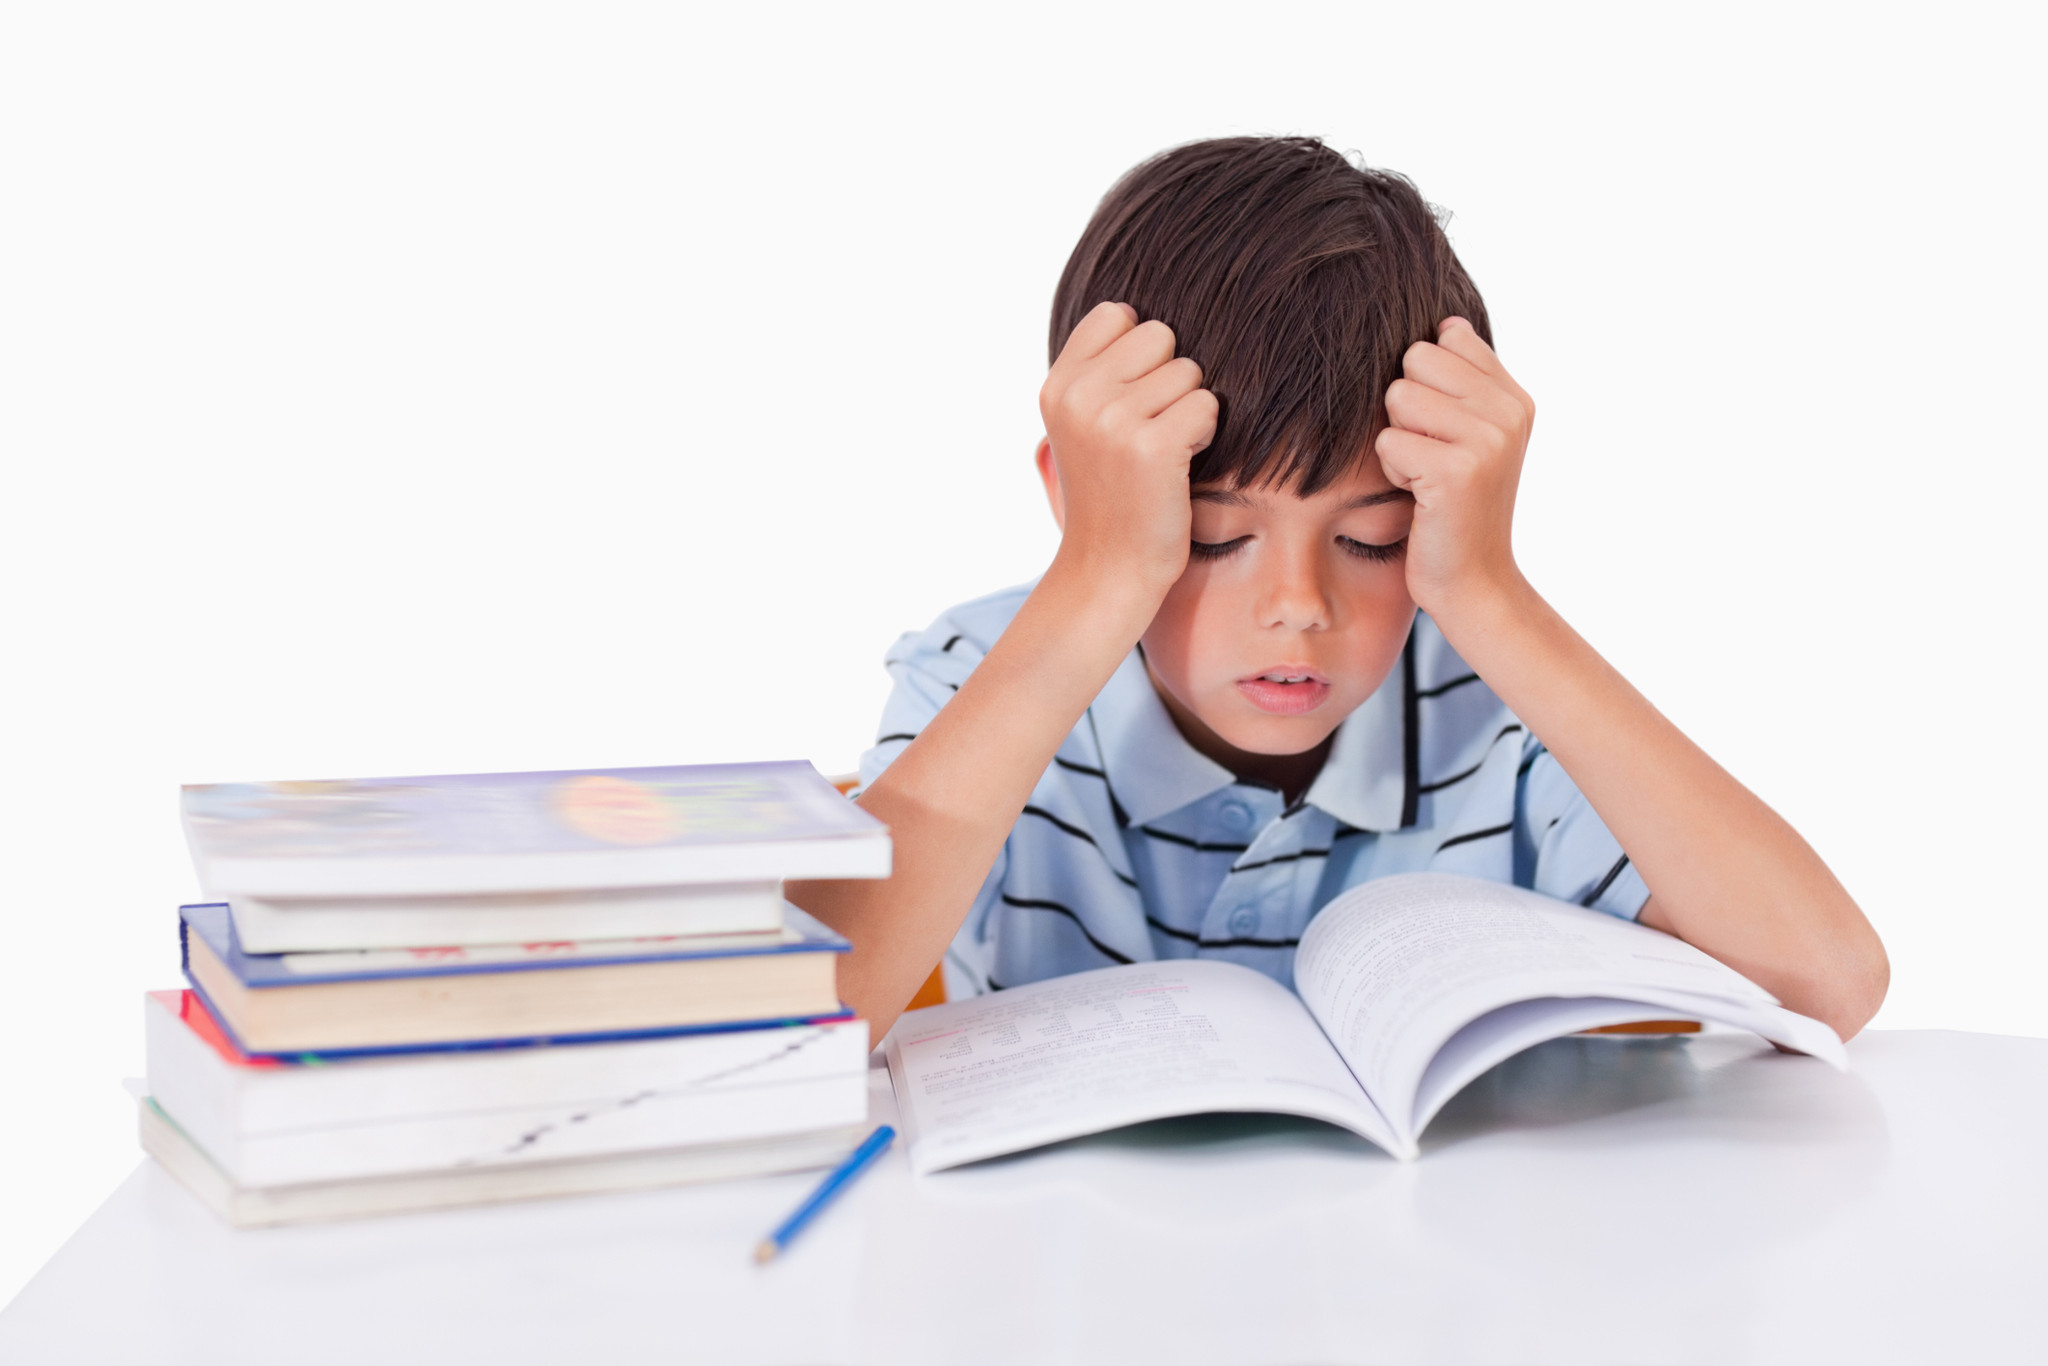 ctnow-study-kids-have-too-much-homework-20151210